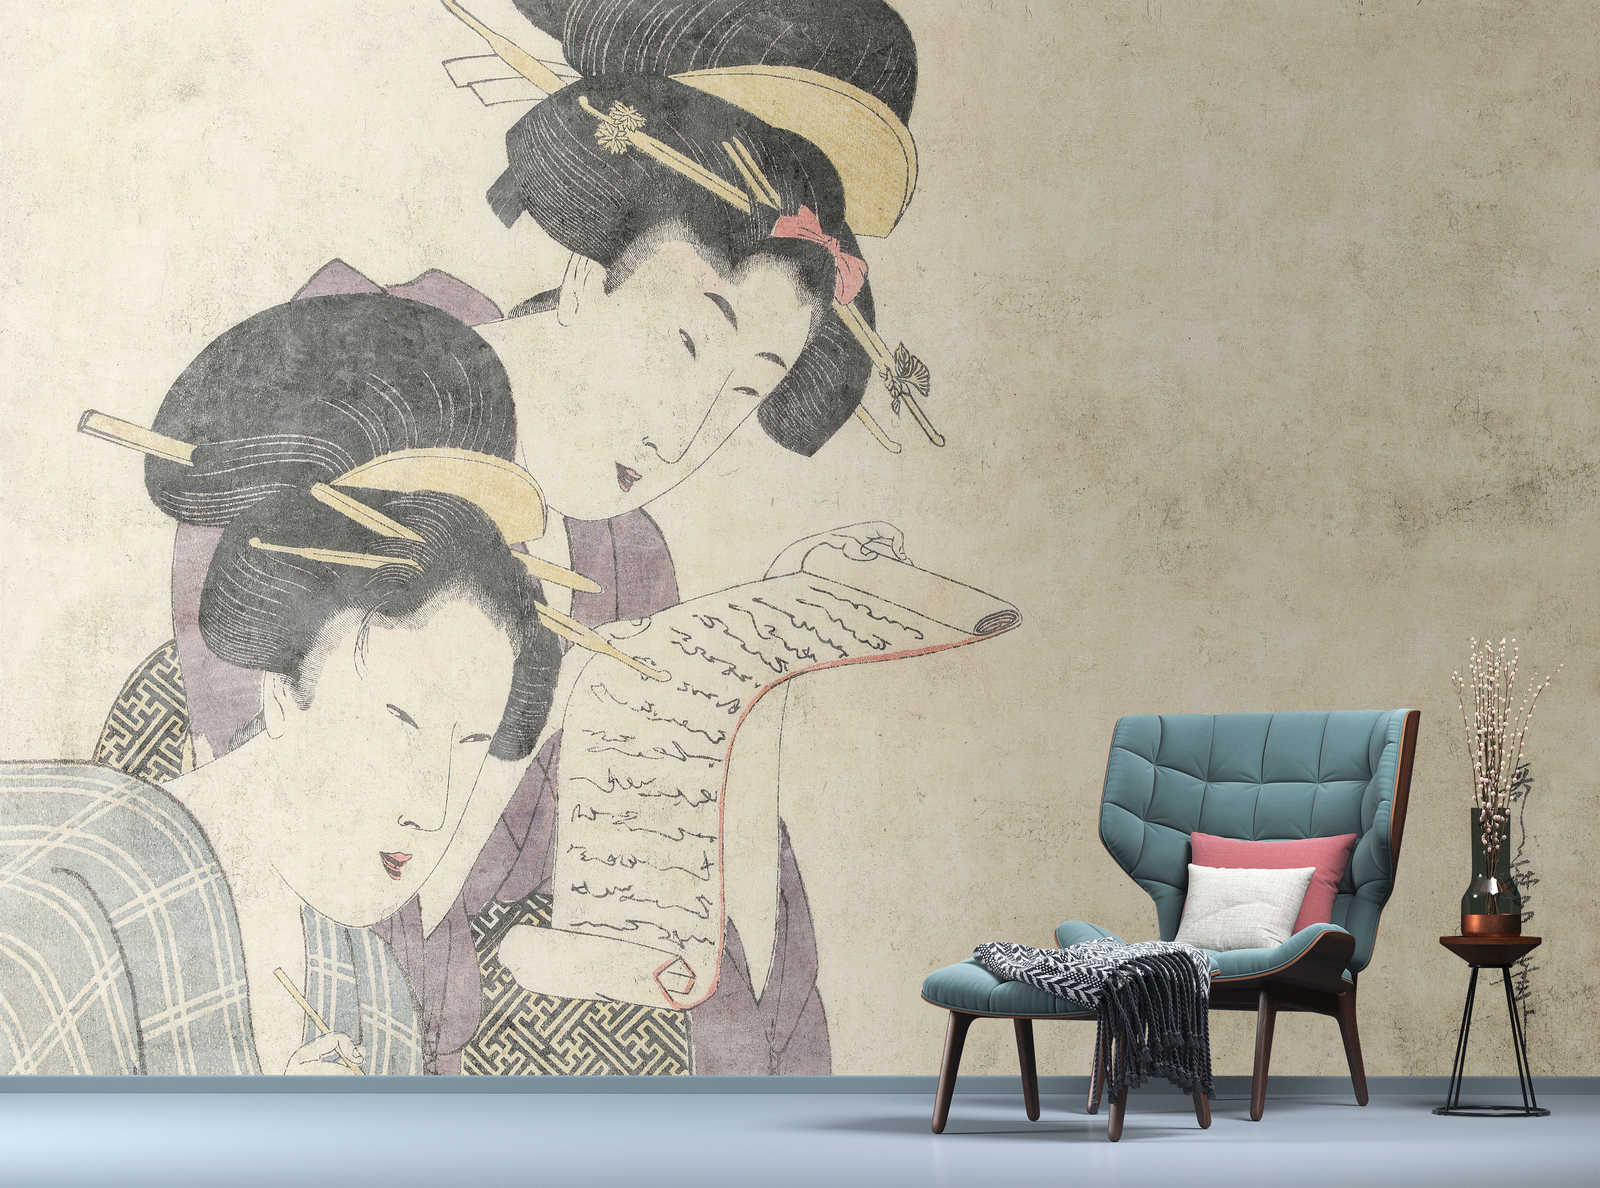             Osaka 3 - Asian mural vintage drawing & plaster texture
        